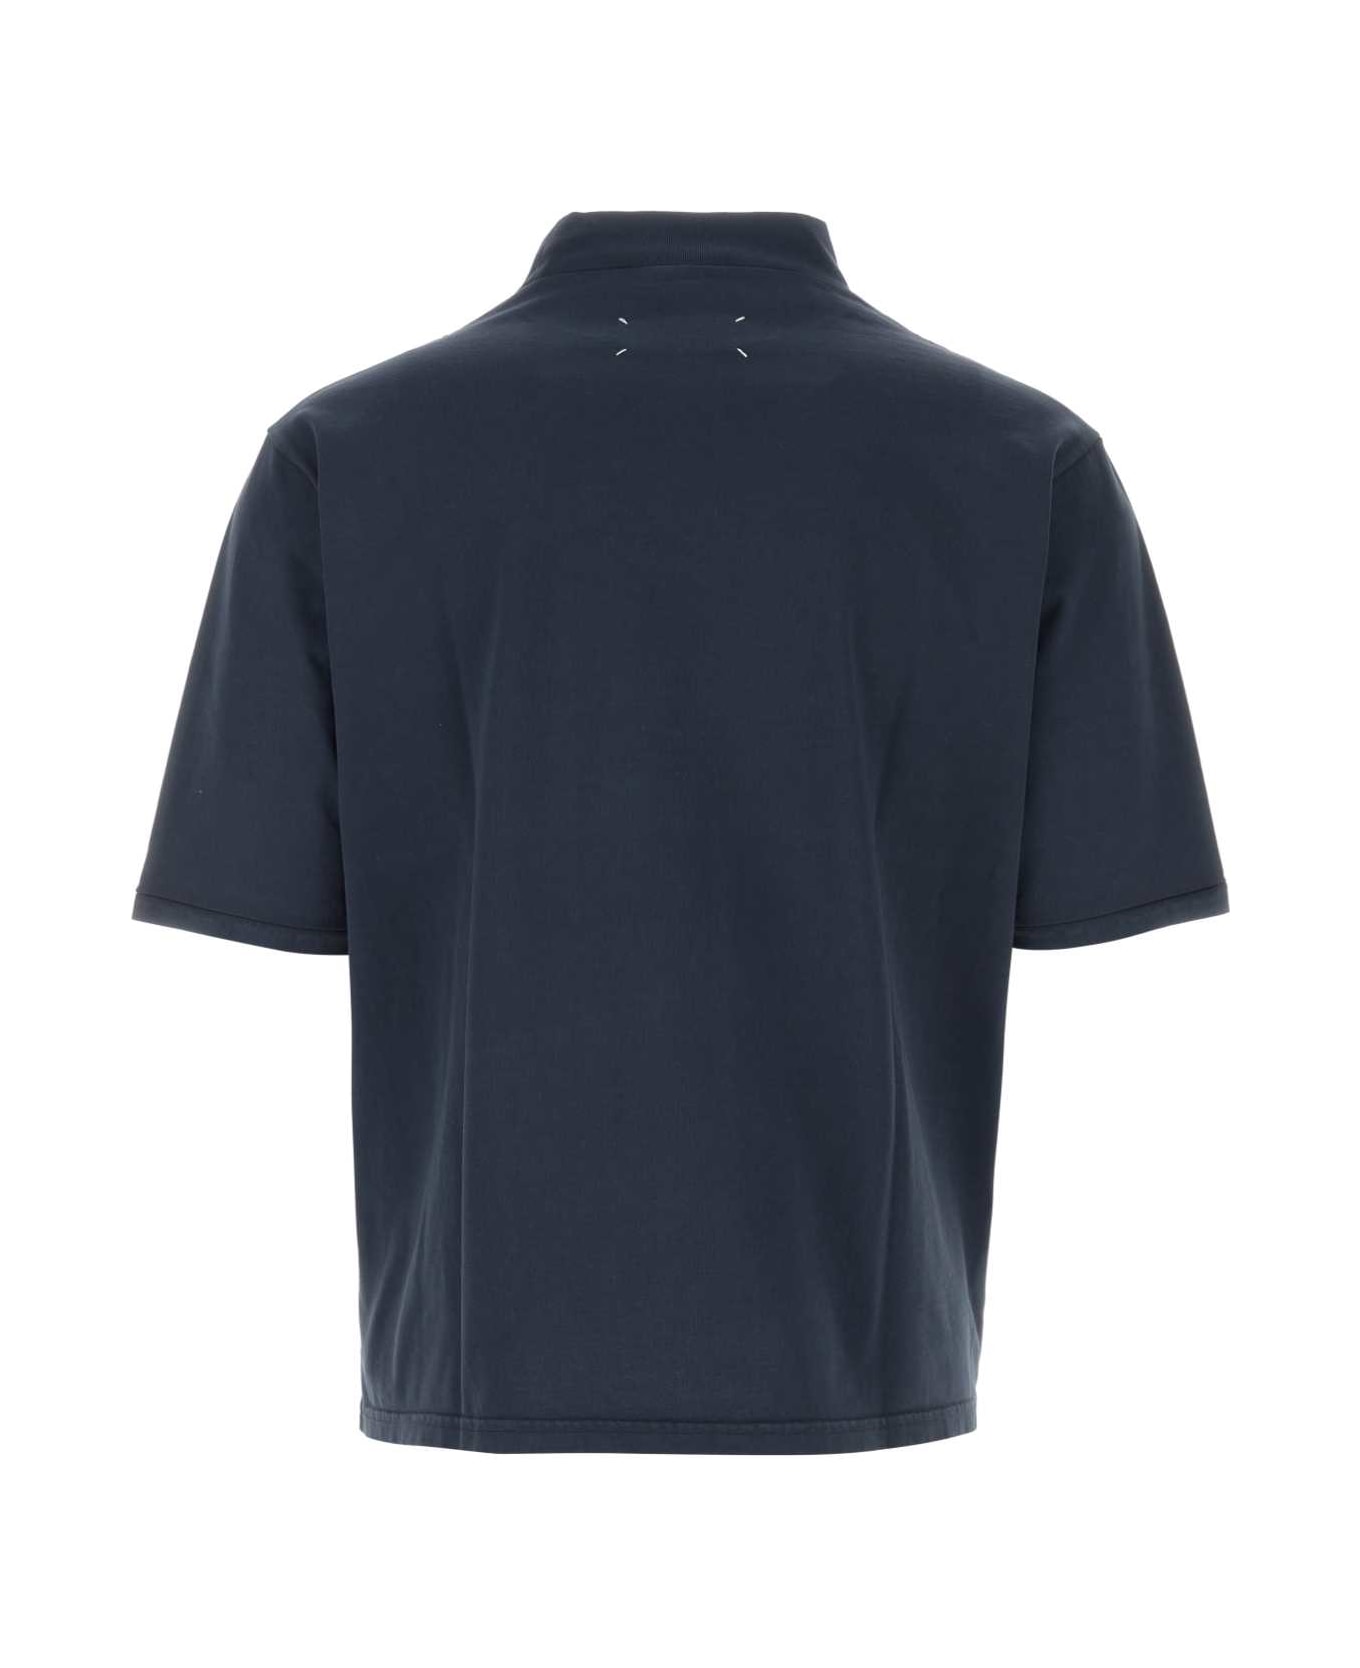 Maison Margiela Navy Blue Cotton T-shirt - NAVY